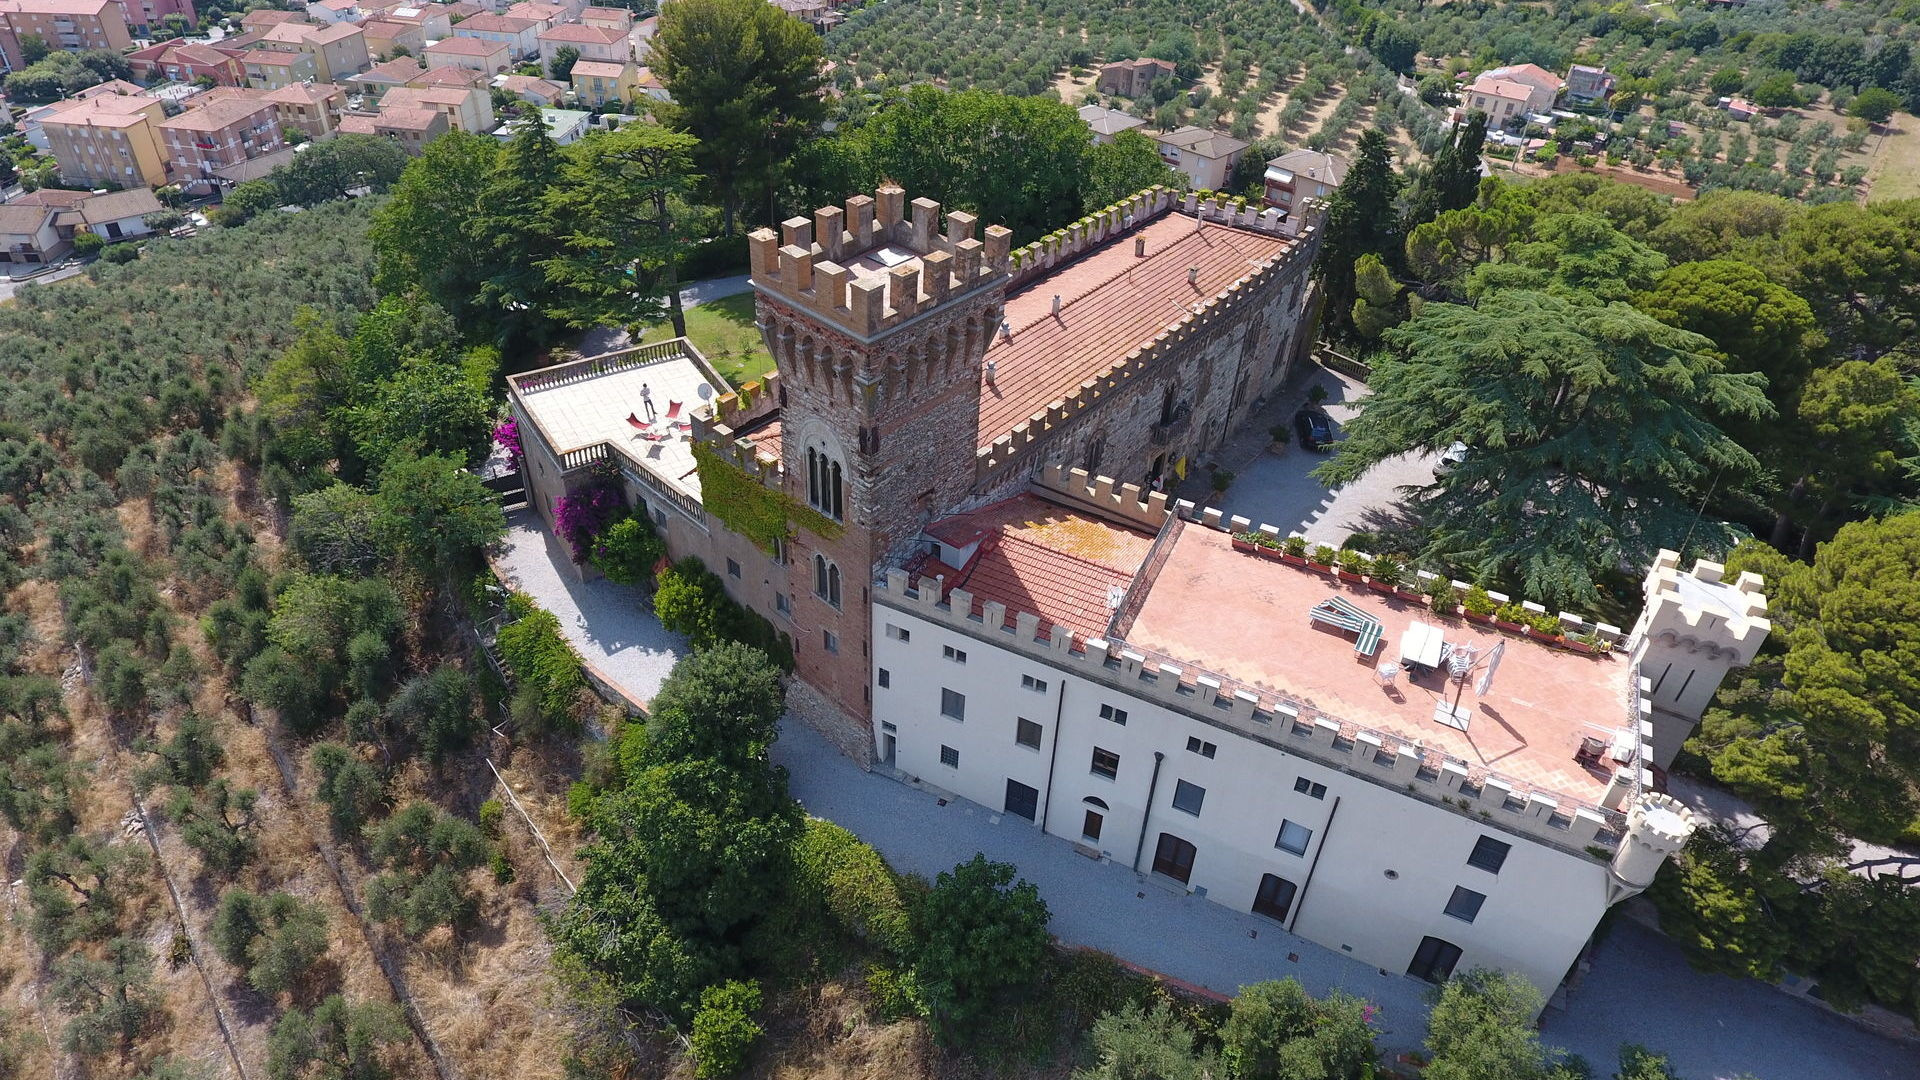 Castello Leopoldo